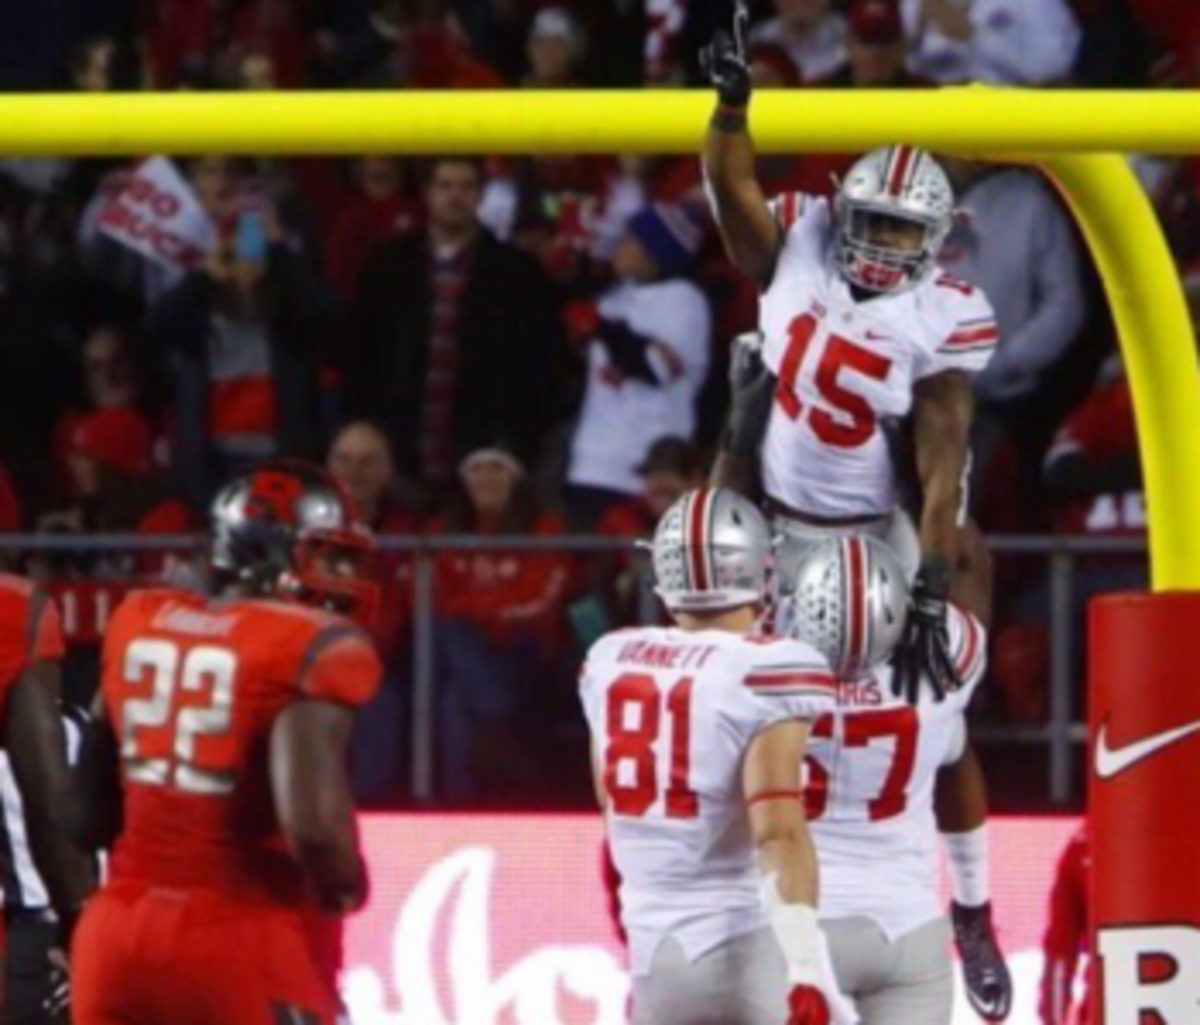 Ezekiel Elliott gets held up in the air by an Ohio State teammate.